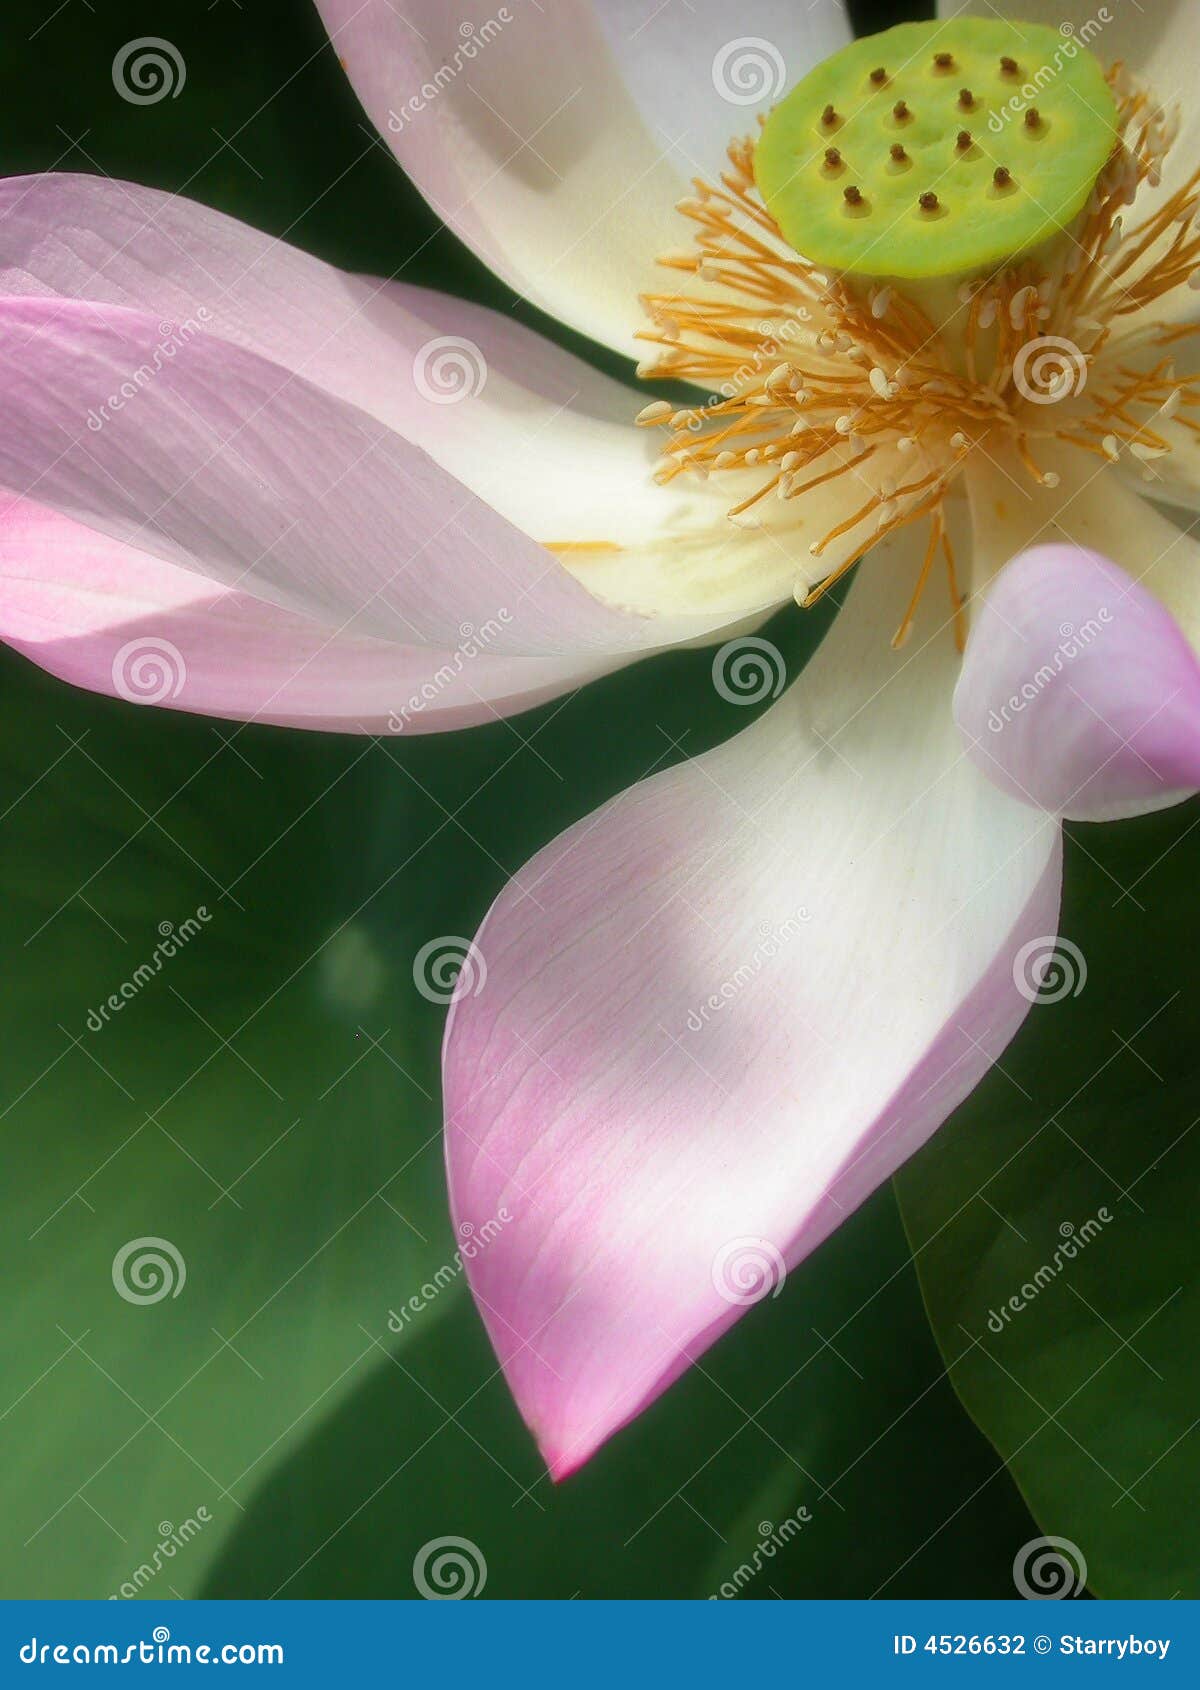 lotus petal